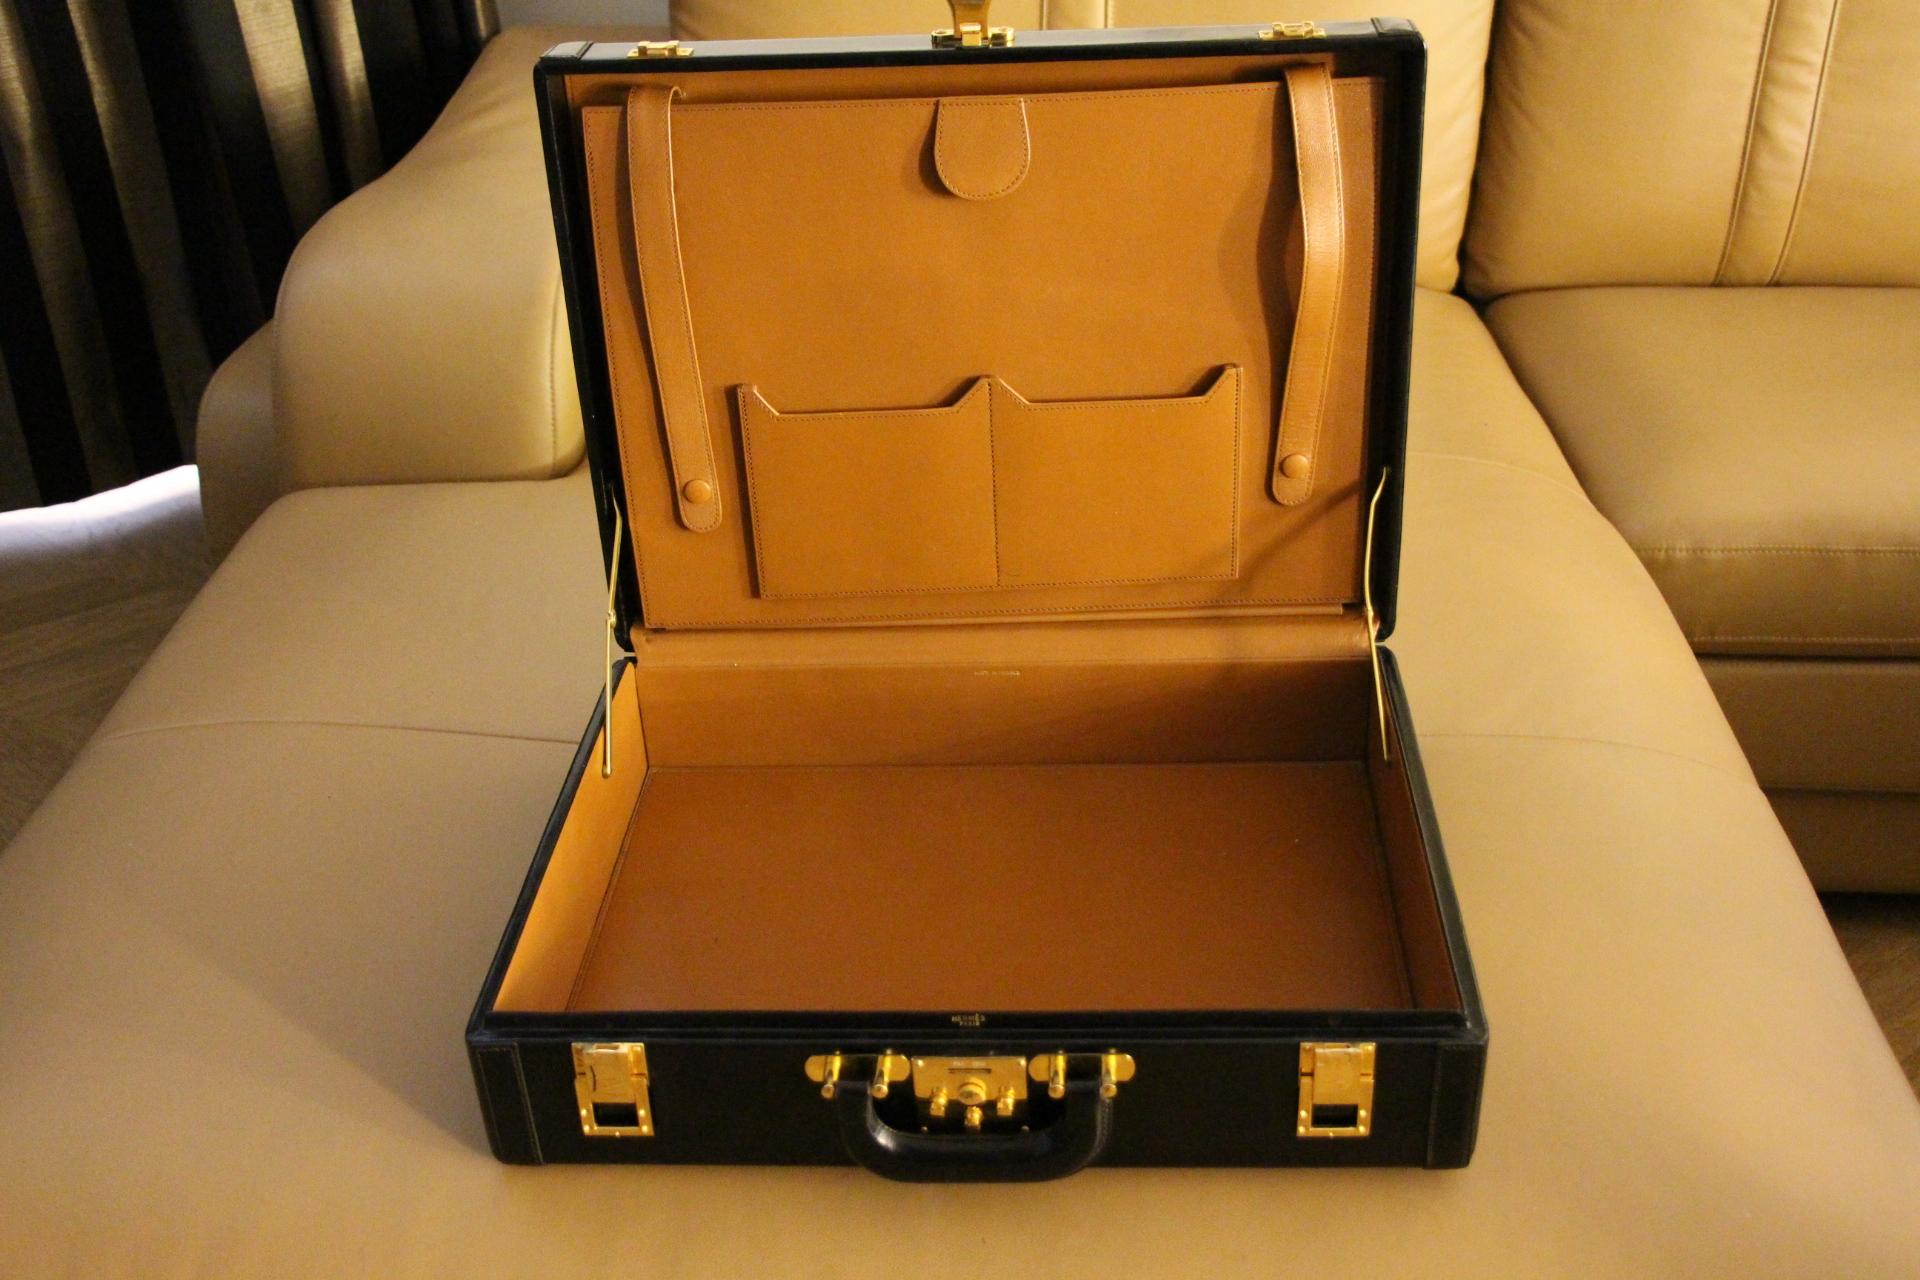 Hermès Black Leather Briefcase, Hermes Attache, Hermes Bag 6